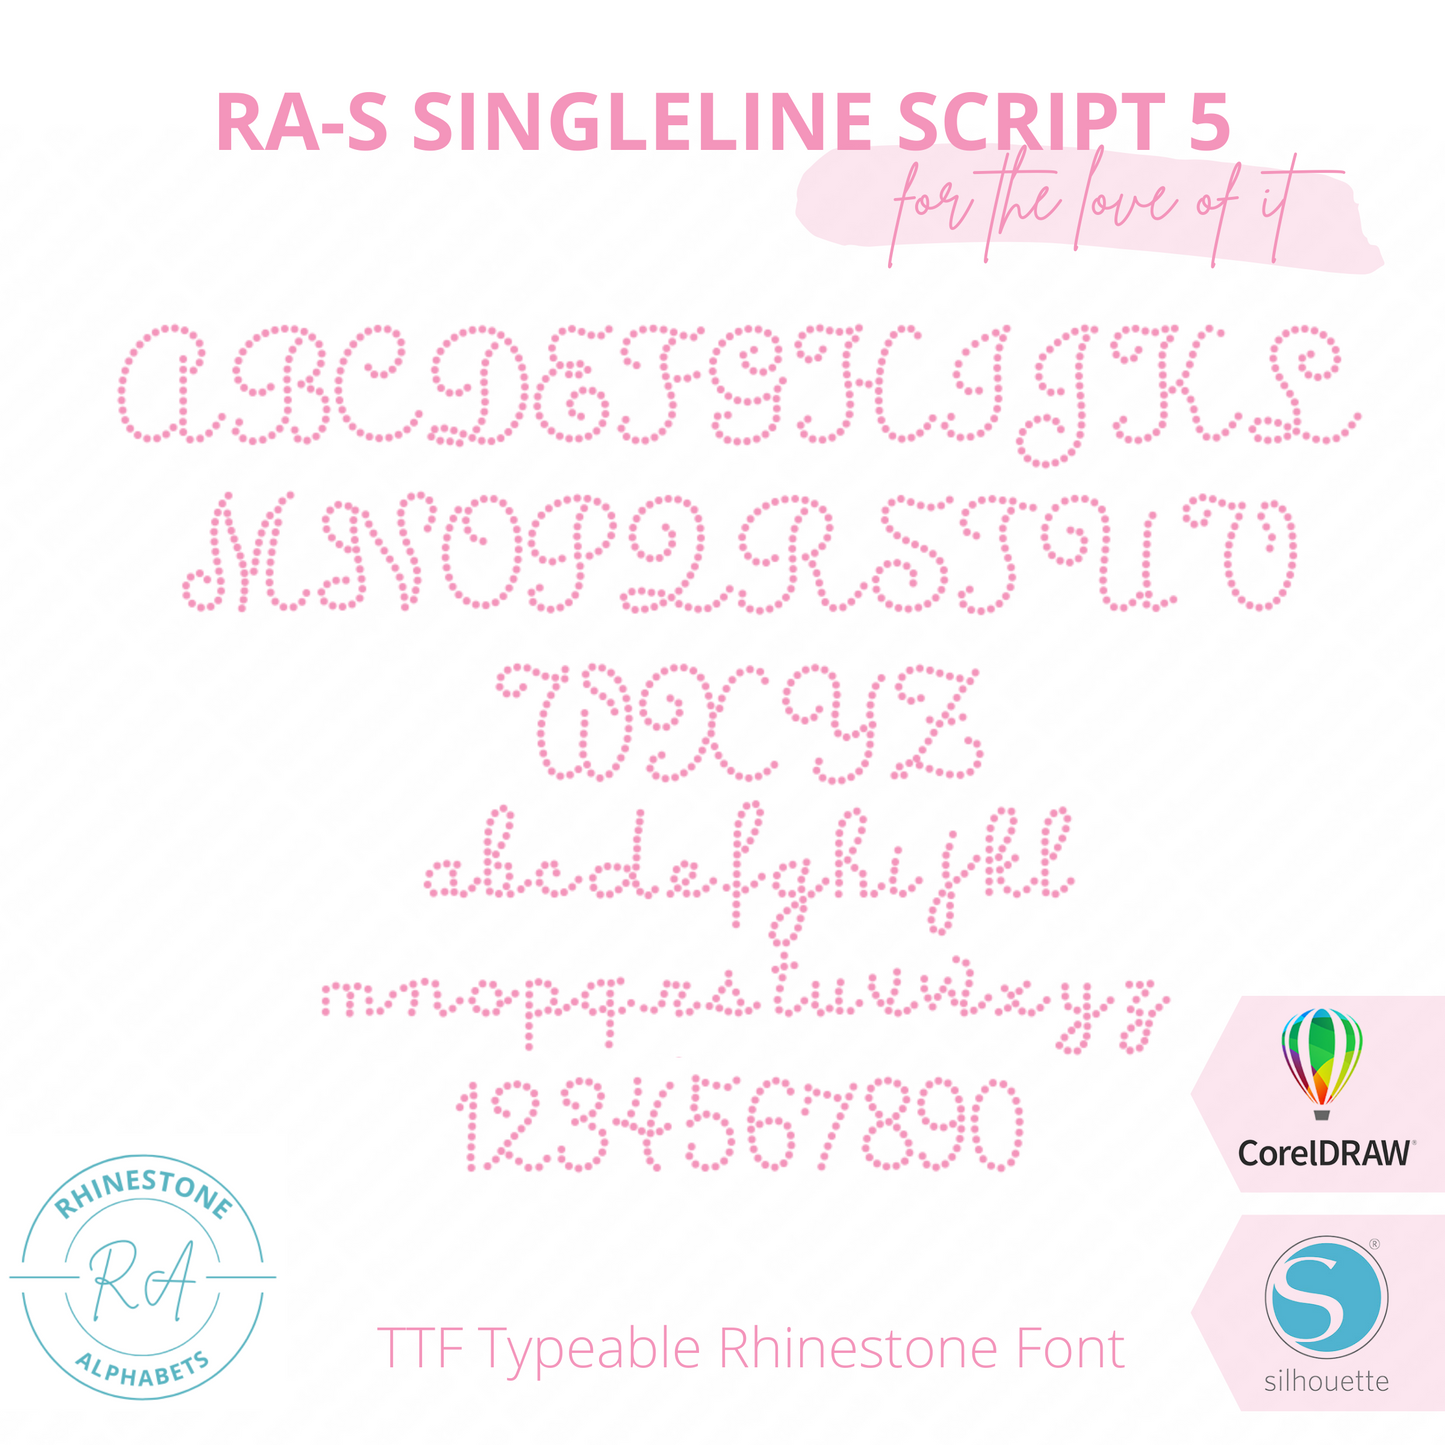 RA-S SIngleline Script 5 - RhinestoneAlphabets